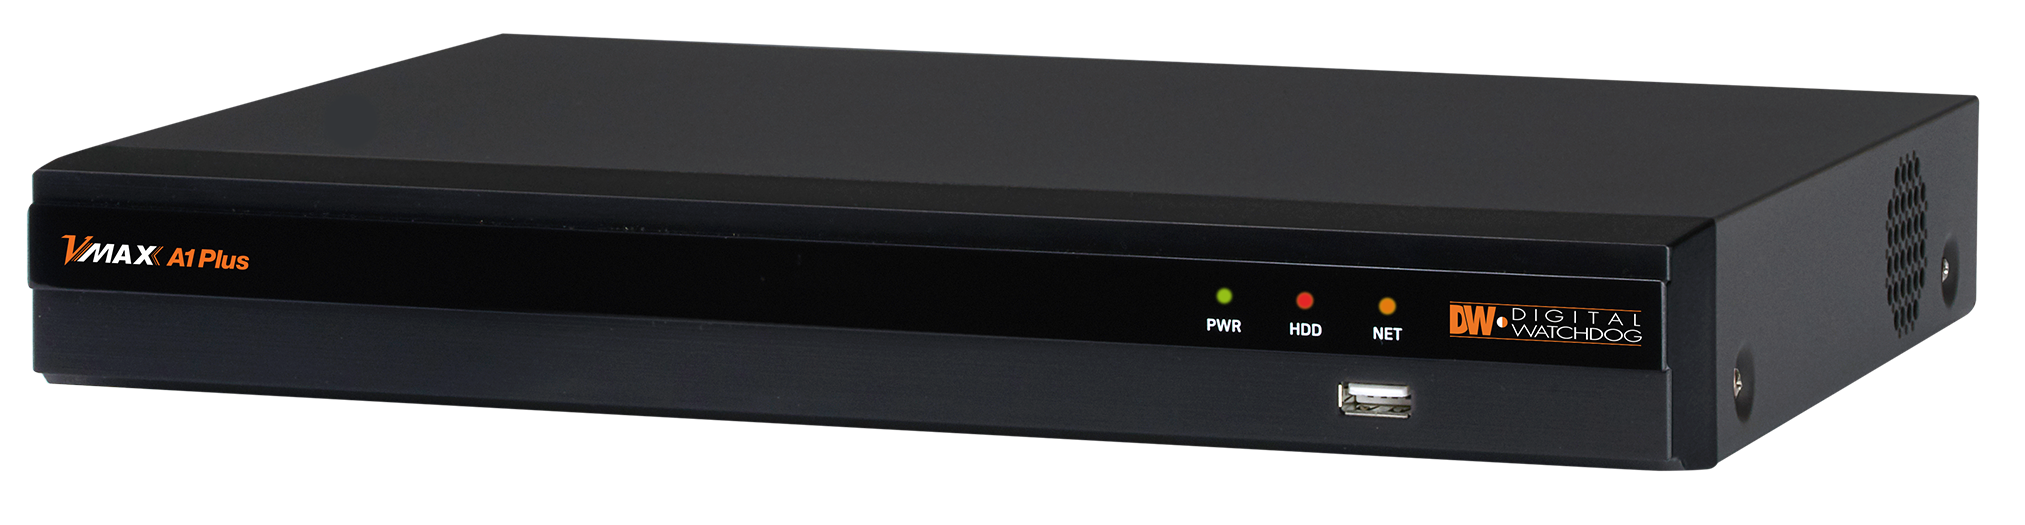 Digital Watchdog DW-VA1P43T  UHDoC - DVR 4ch 4 Channel Universal HD Over Coax DVR